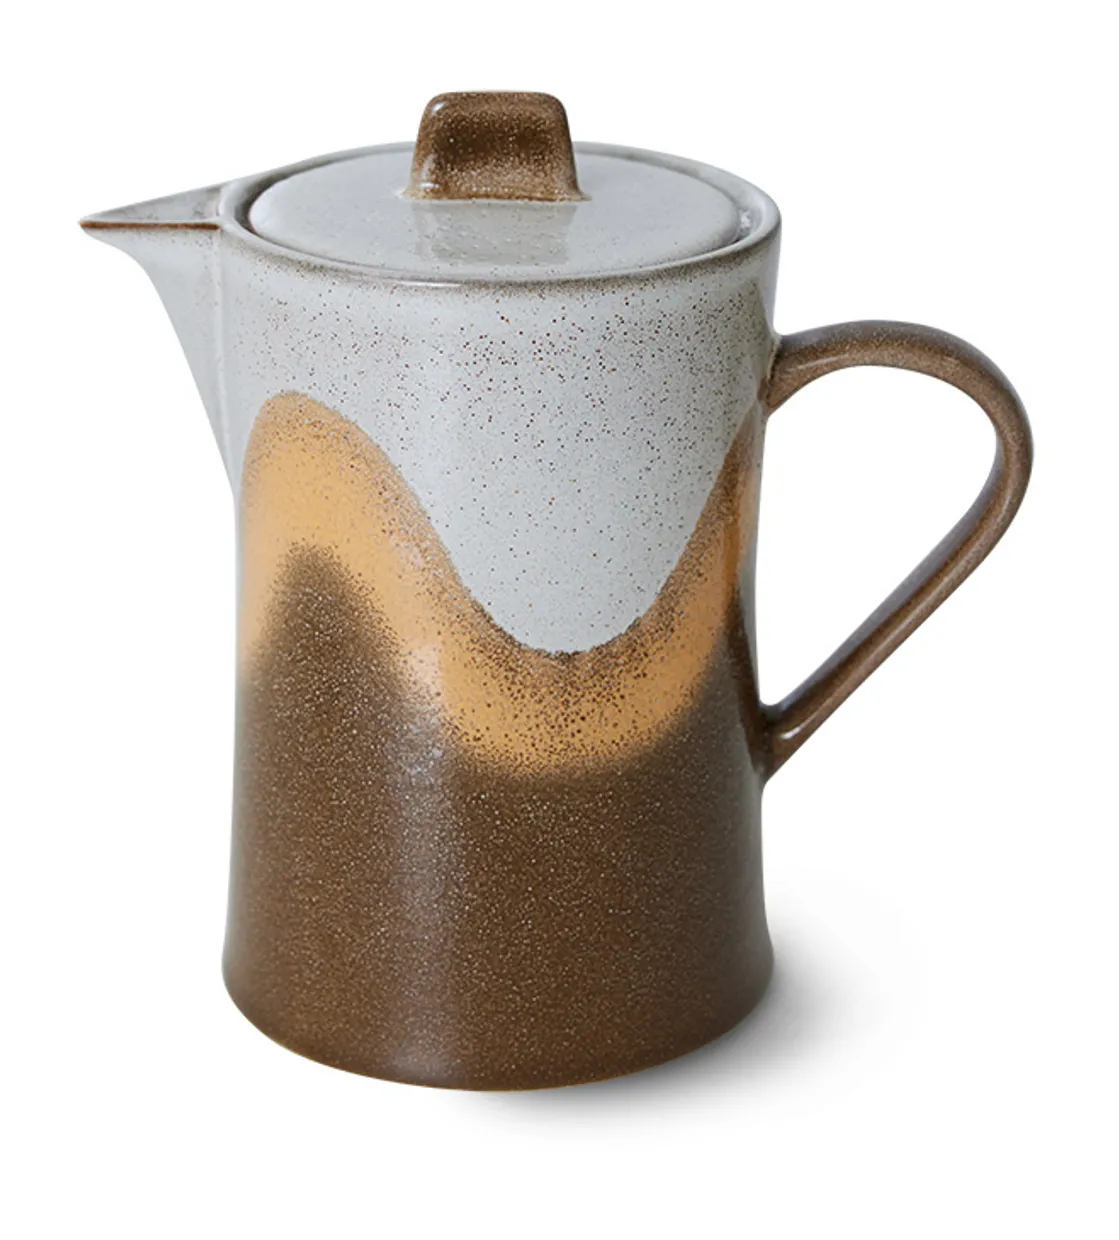 70s ceramics: tea pot, oasis